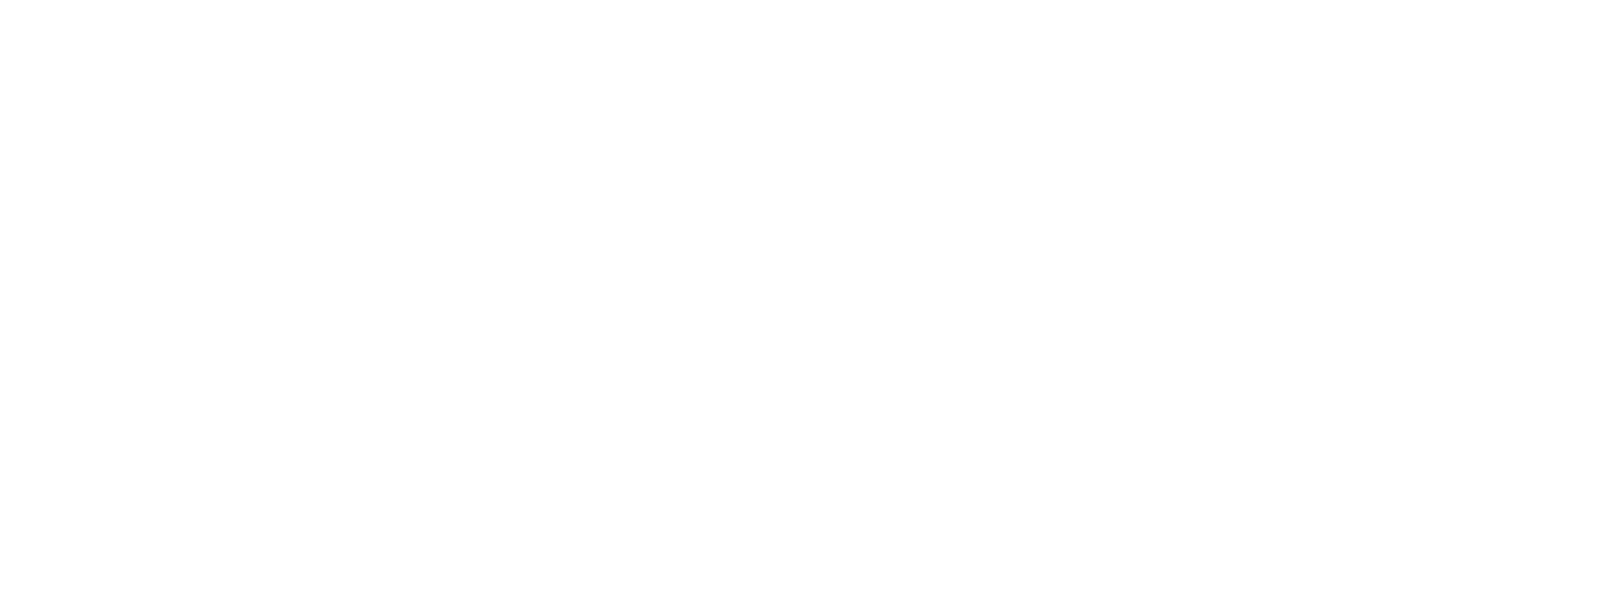 The Fight Machine